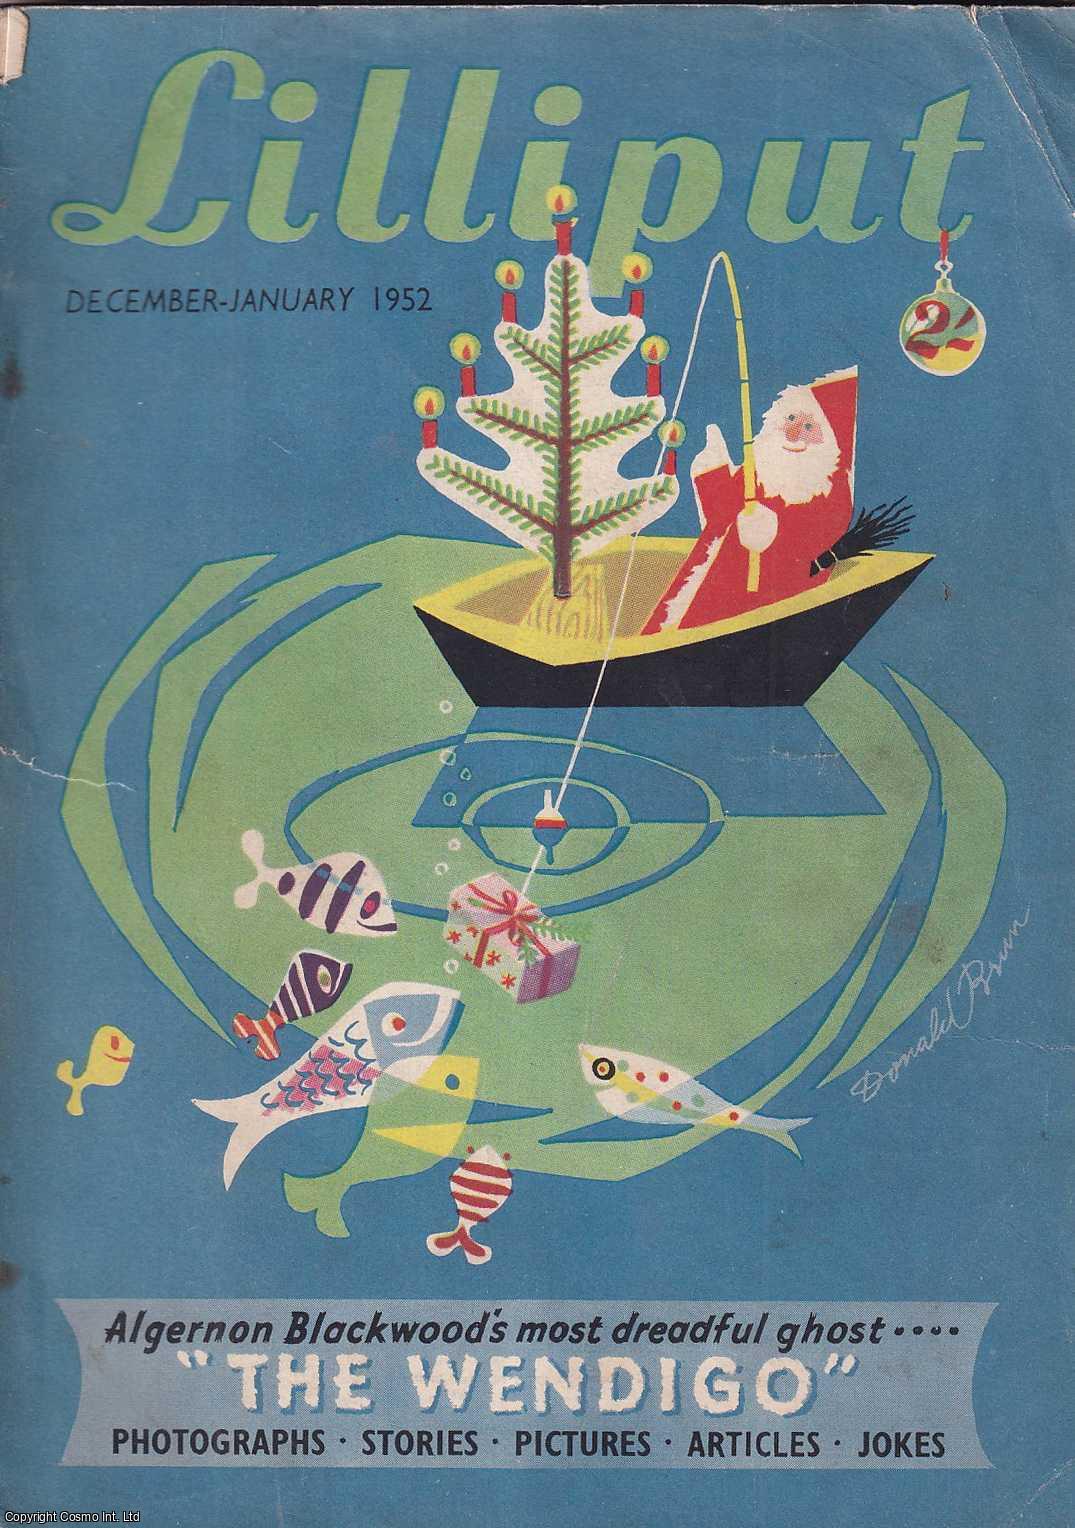 Lilliput - Lilliput Magazine. December-January 1952. Vol.29 no.6 Issue no.175. Ronald Searle drawings, Edward Ardizzone illustrations, Mervyn Peake illustrations, Algernon Blackwood story, and other pieces.